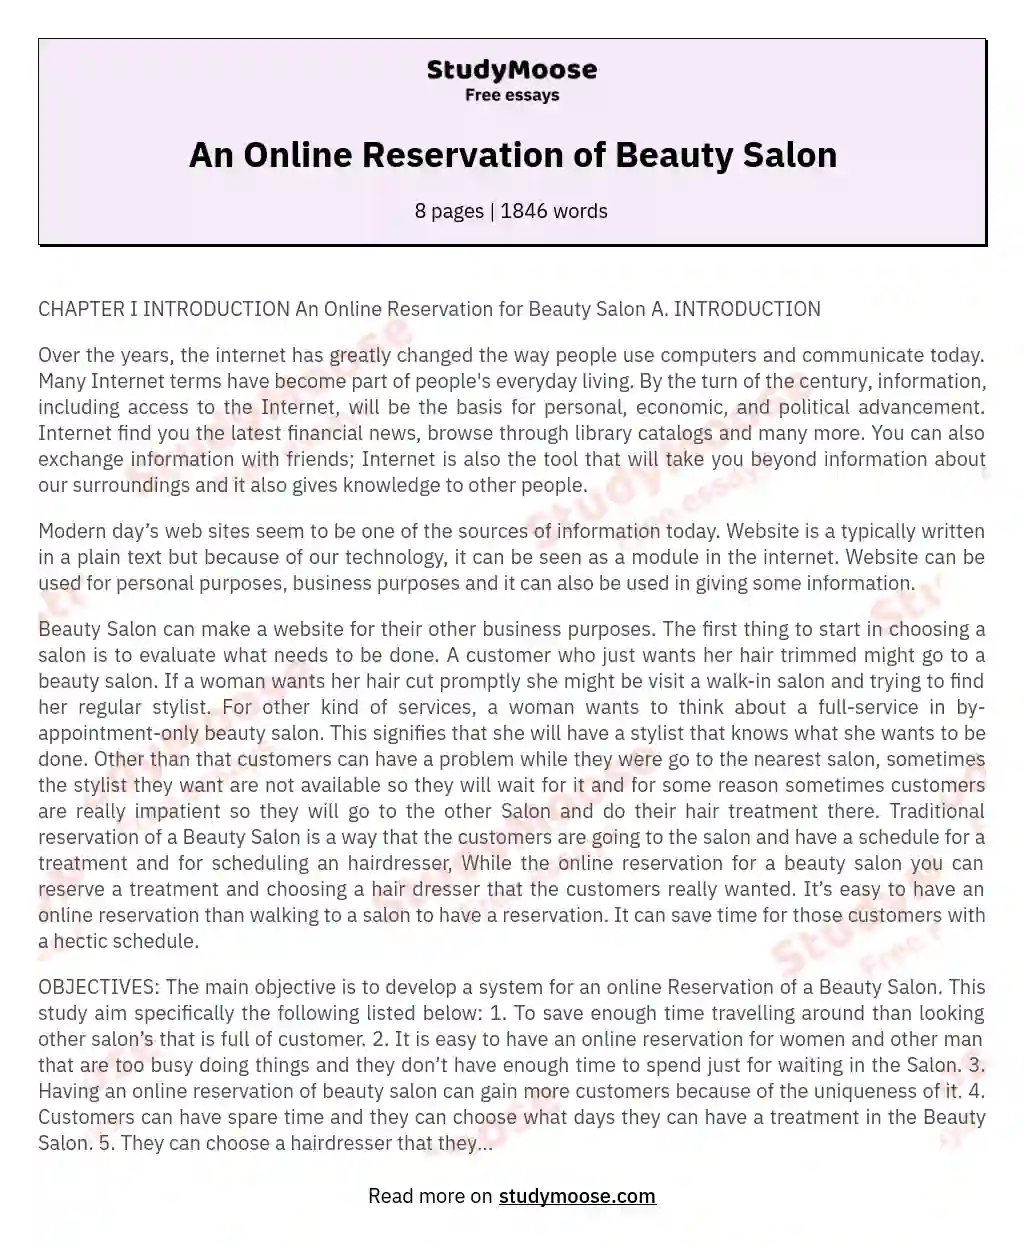 An Online Reservation of Beauty Salon essay